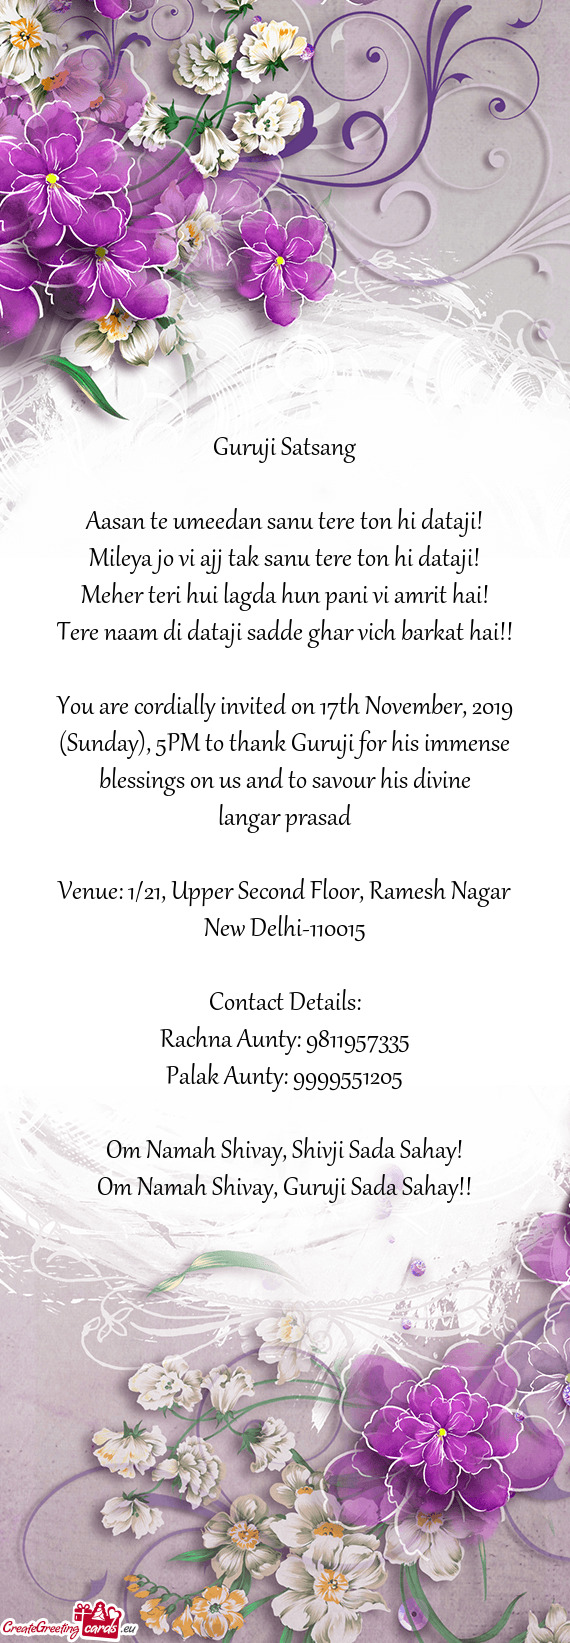 Venue: 1/21, Upper Second Floor, Ramesh Nagar